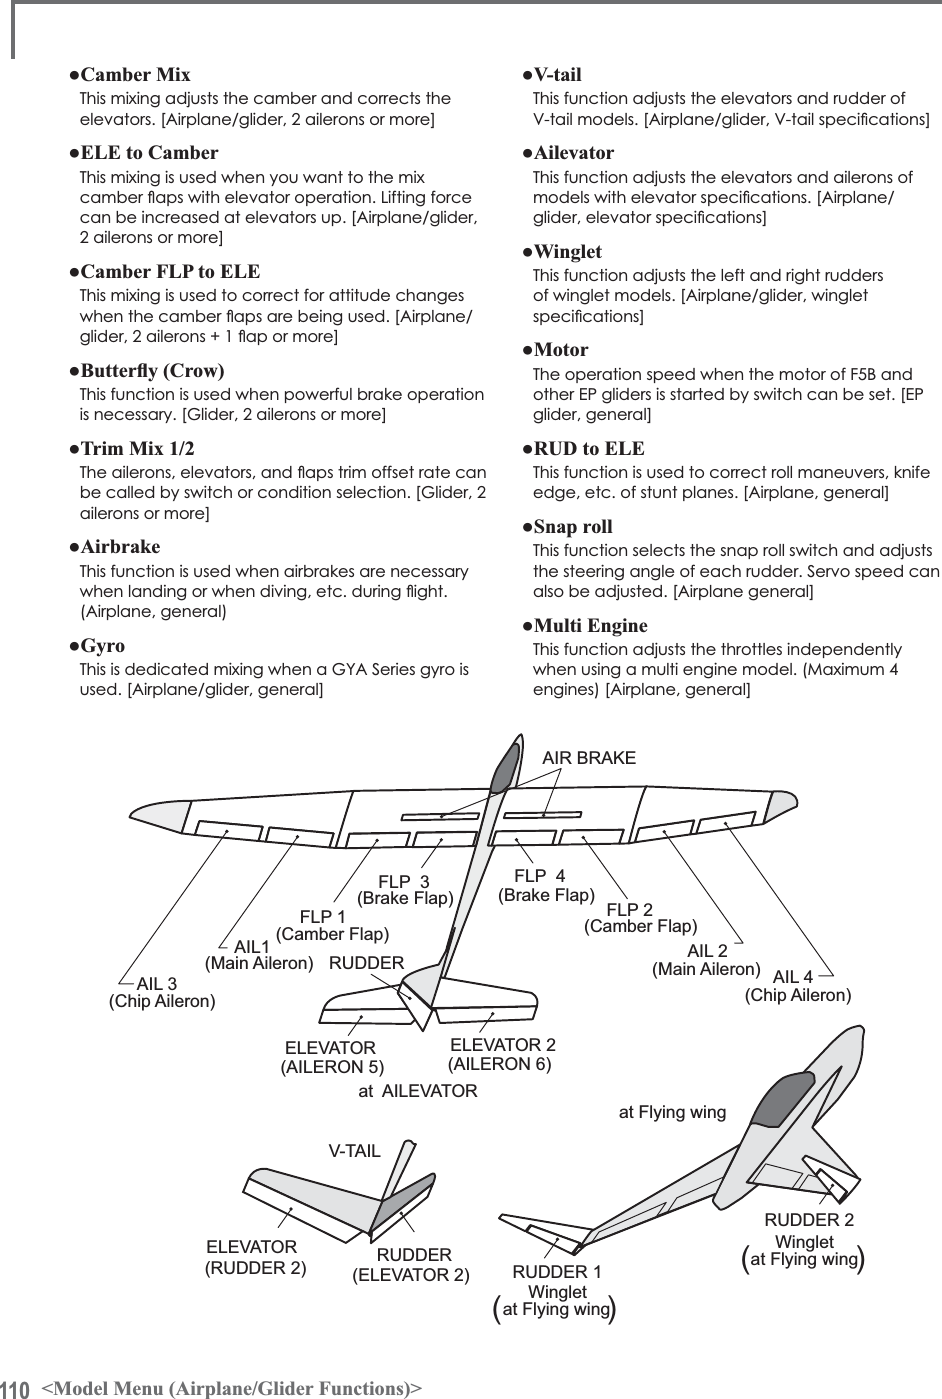 110 &lt;Model Menu (Airplane/Glider Functions)&gt;AIR BRAKEAIL 3(Chip Aileron)AIL 4(Chip Aileron)AIL1(Main Aileron) AIL 2(Main Aileron)FLP 2(Camber Flap)FLP 1(Camber Flap)V-TAILat  AILEVATORFLP  3(Brake Flap)FLP  4(Brake Flap)RUDDER 2 WingletRUDDER 1(ELEVATOR 2)RUDDERRUDDERELEVATOR(RUDDER 2) Wingletat Flying wingat Flying wingat Flying wing(            )(            )ELEVATOR(AILERON 5)ELEVATOR 2(AILERON 6)Ɣ&amp;DPEHU0L[This mixing adjusts the camber and corrects the elevators. [Airplane/glider, 2 ailerons or more]Ɣ(/(WR&amp;DPEHUThis mixing is used when you want to the mix FDPEHUÁDSVZLWKHOHYDWRURSHUDWLRQ/LIWLQJIRUFHcan be increased at elevators up. [Airplane/glider, 2 ailerons or more]Ɣ&amp;DPEHU)/3WR(/(This mixing is used to correct for attitude changes ZKHQWKHFDPEHUÁDSVDUHEHLQJXVHG&gt;$LUSODQHJOLGHUDLOHURQVÁDSRUPRUH@Ɣ%XWWHUÀ\&amp;URZThis function is used when powerful brake operation is necessary. [Glider, 2 ailerons or more]Ɣ7ULP0L[7KHDLOHURQVHOHYDWRUVDQGÁDSVWULPRIIVHWUDWHFDQbe called by switch or condition selection. [Glider, 2 ailerons or more]Ɣ$LUEUDNHThis function is used when airbrakes are necessary ZKHQODQGLQJRUZKHQGLYLQJHWFGXULQJÁLJKW(Airplane, general)Ɣ*\URThis is dedicated mixing when a GYA Series gyro is used. [Airplane/glider, general]Ɣ9WDLOThis function adjusts the elevators and rudder of 9WDLOPRGHOV&gt;$LUSODQHJOLGHU9WDLOVSHFLÀFDWLRQV@Ɣ$LOHYDWRUThis function adjusts the elevators and ailerons of PRGHOVZLWKHOHYDWRUVSHFLÀFDWLRQV&gt;$LUSODQHJOLGHUHOHYDWRUVSHFLÀFDWLRQV@Ɣ:LQJOHWThis function adjusts the left and right rudders of winglet models. [Airplane/glider, winglet VSHFLÀFDWLRQV@Ɣ0RWRUThe operation speed when the motor of F5B and other EP gliders is started by switch can be set. [EP glider, general]Ɣ58&apos;WR(/(This function is used to correct roll maneuvers, knife edge, etc. of stunt planes. [Airplane, general]Ɣ6QDSUROOThis function selects the snap roll switch and adjusts the steering angle of each rudder. Servo speed can also be adjusted. [Airplane general]Ɣ0XOWL(QJLQHThis function adjusts the throttles independently when using a multi engine model. (Maximum 4 engines) [Airplane, general]